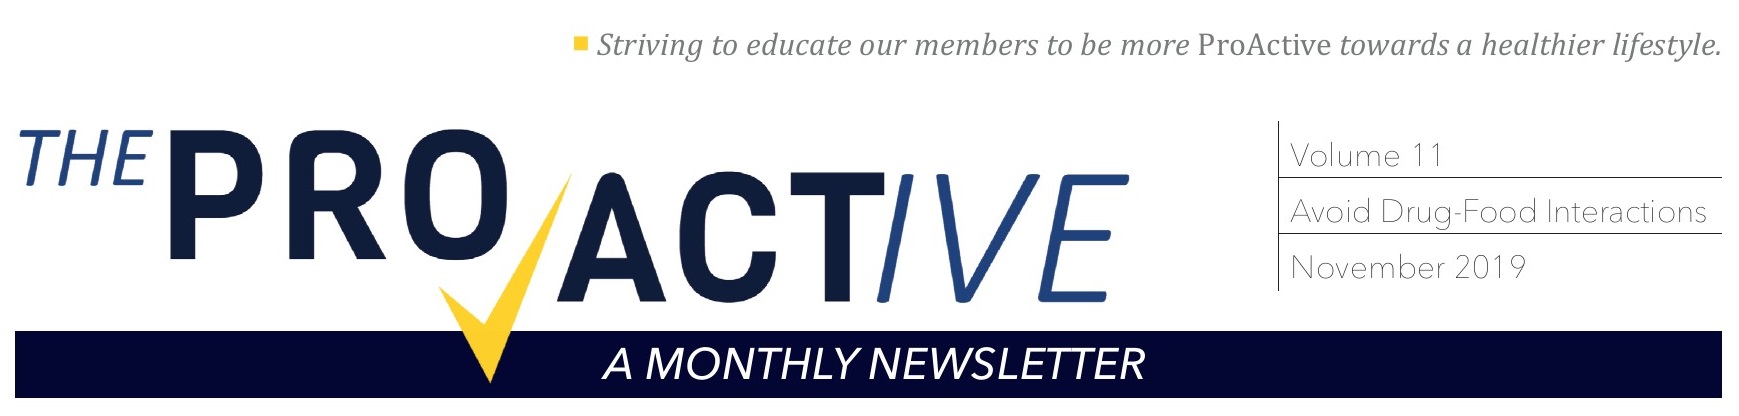 ProAct Newsletter header